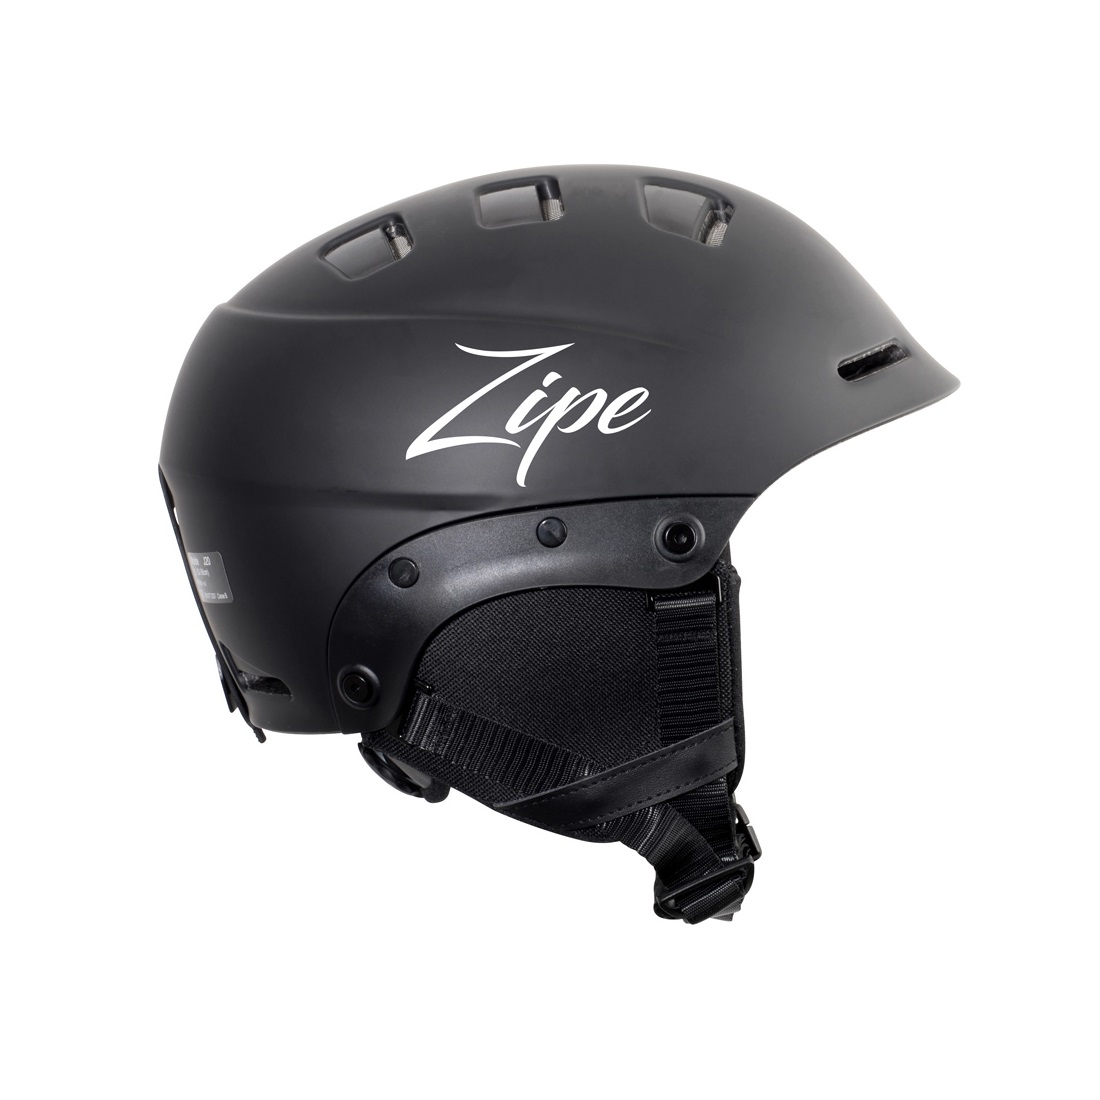  Cască Snowboard -  dr. zipe Machine Helmet Level V